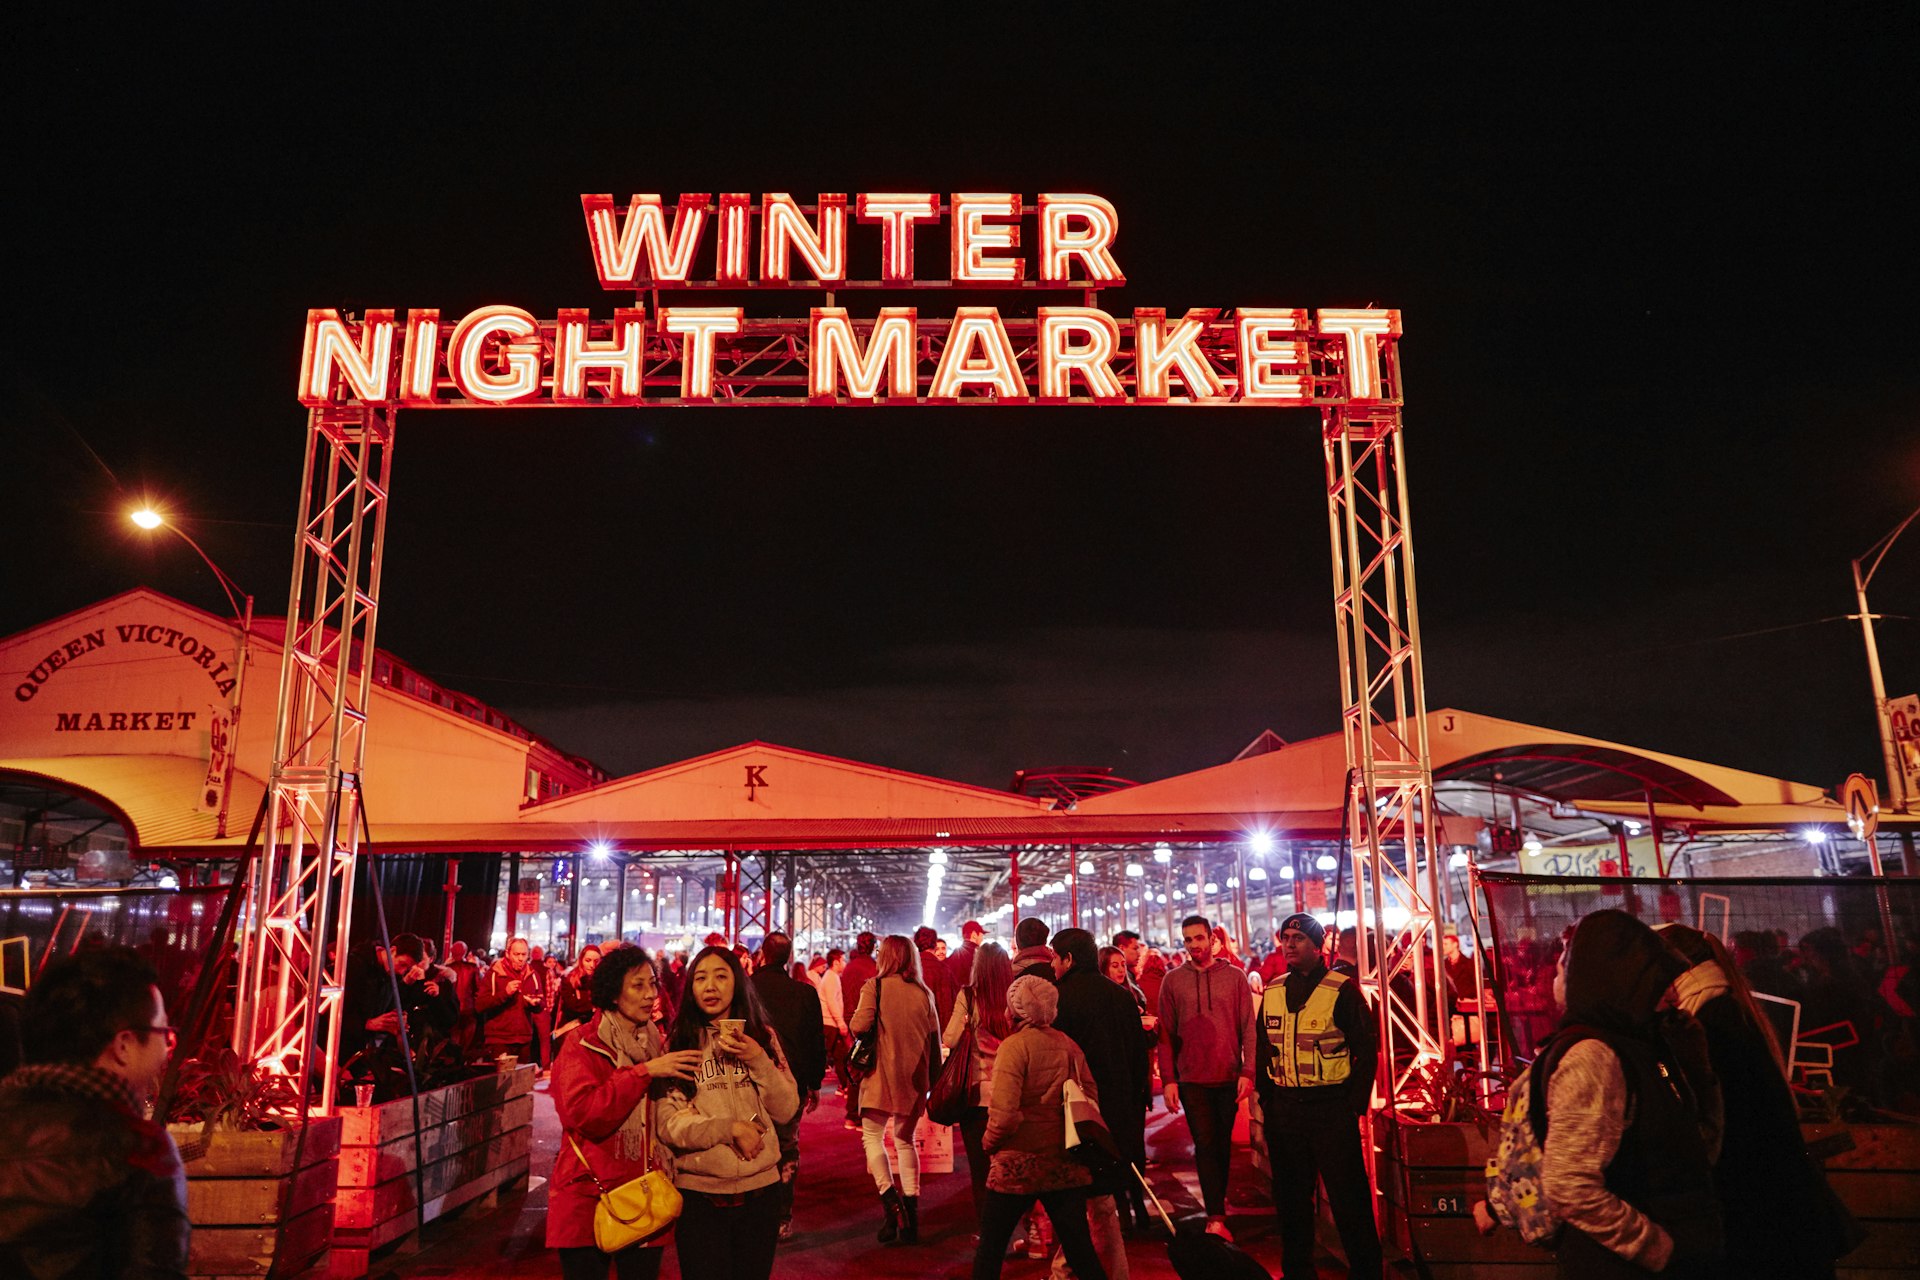 Queen Victoria Market - Winter Night Market entrance lit up Australia